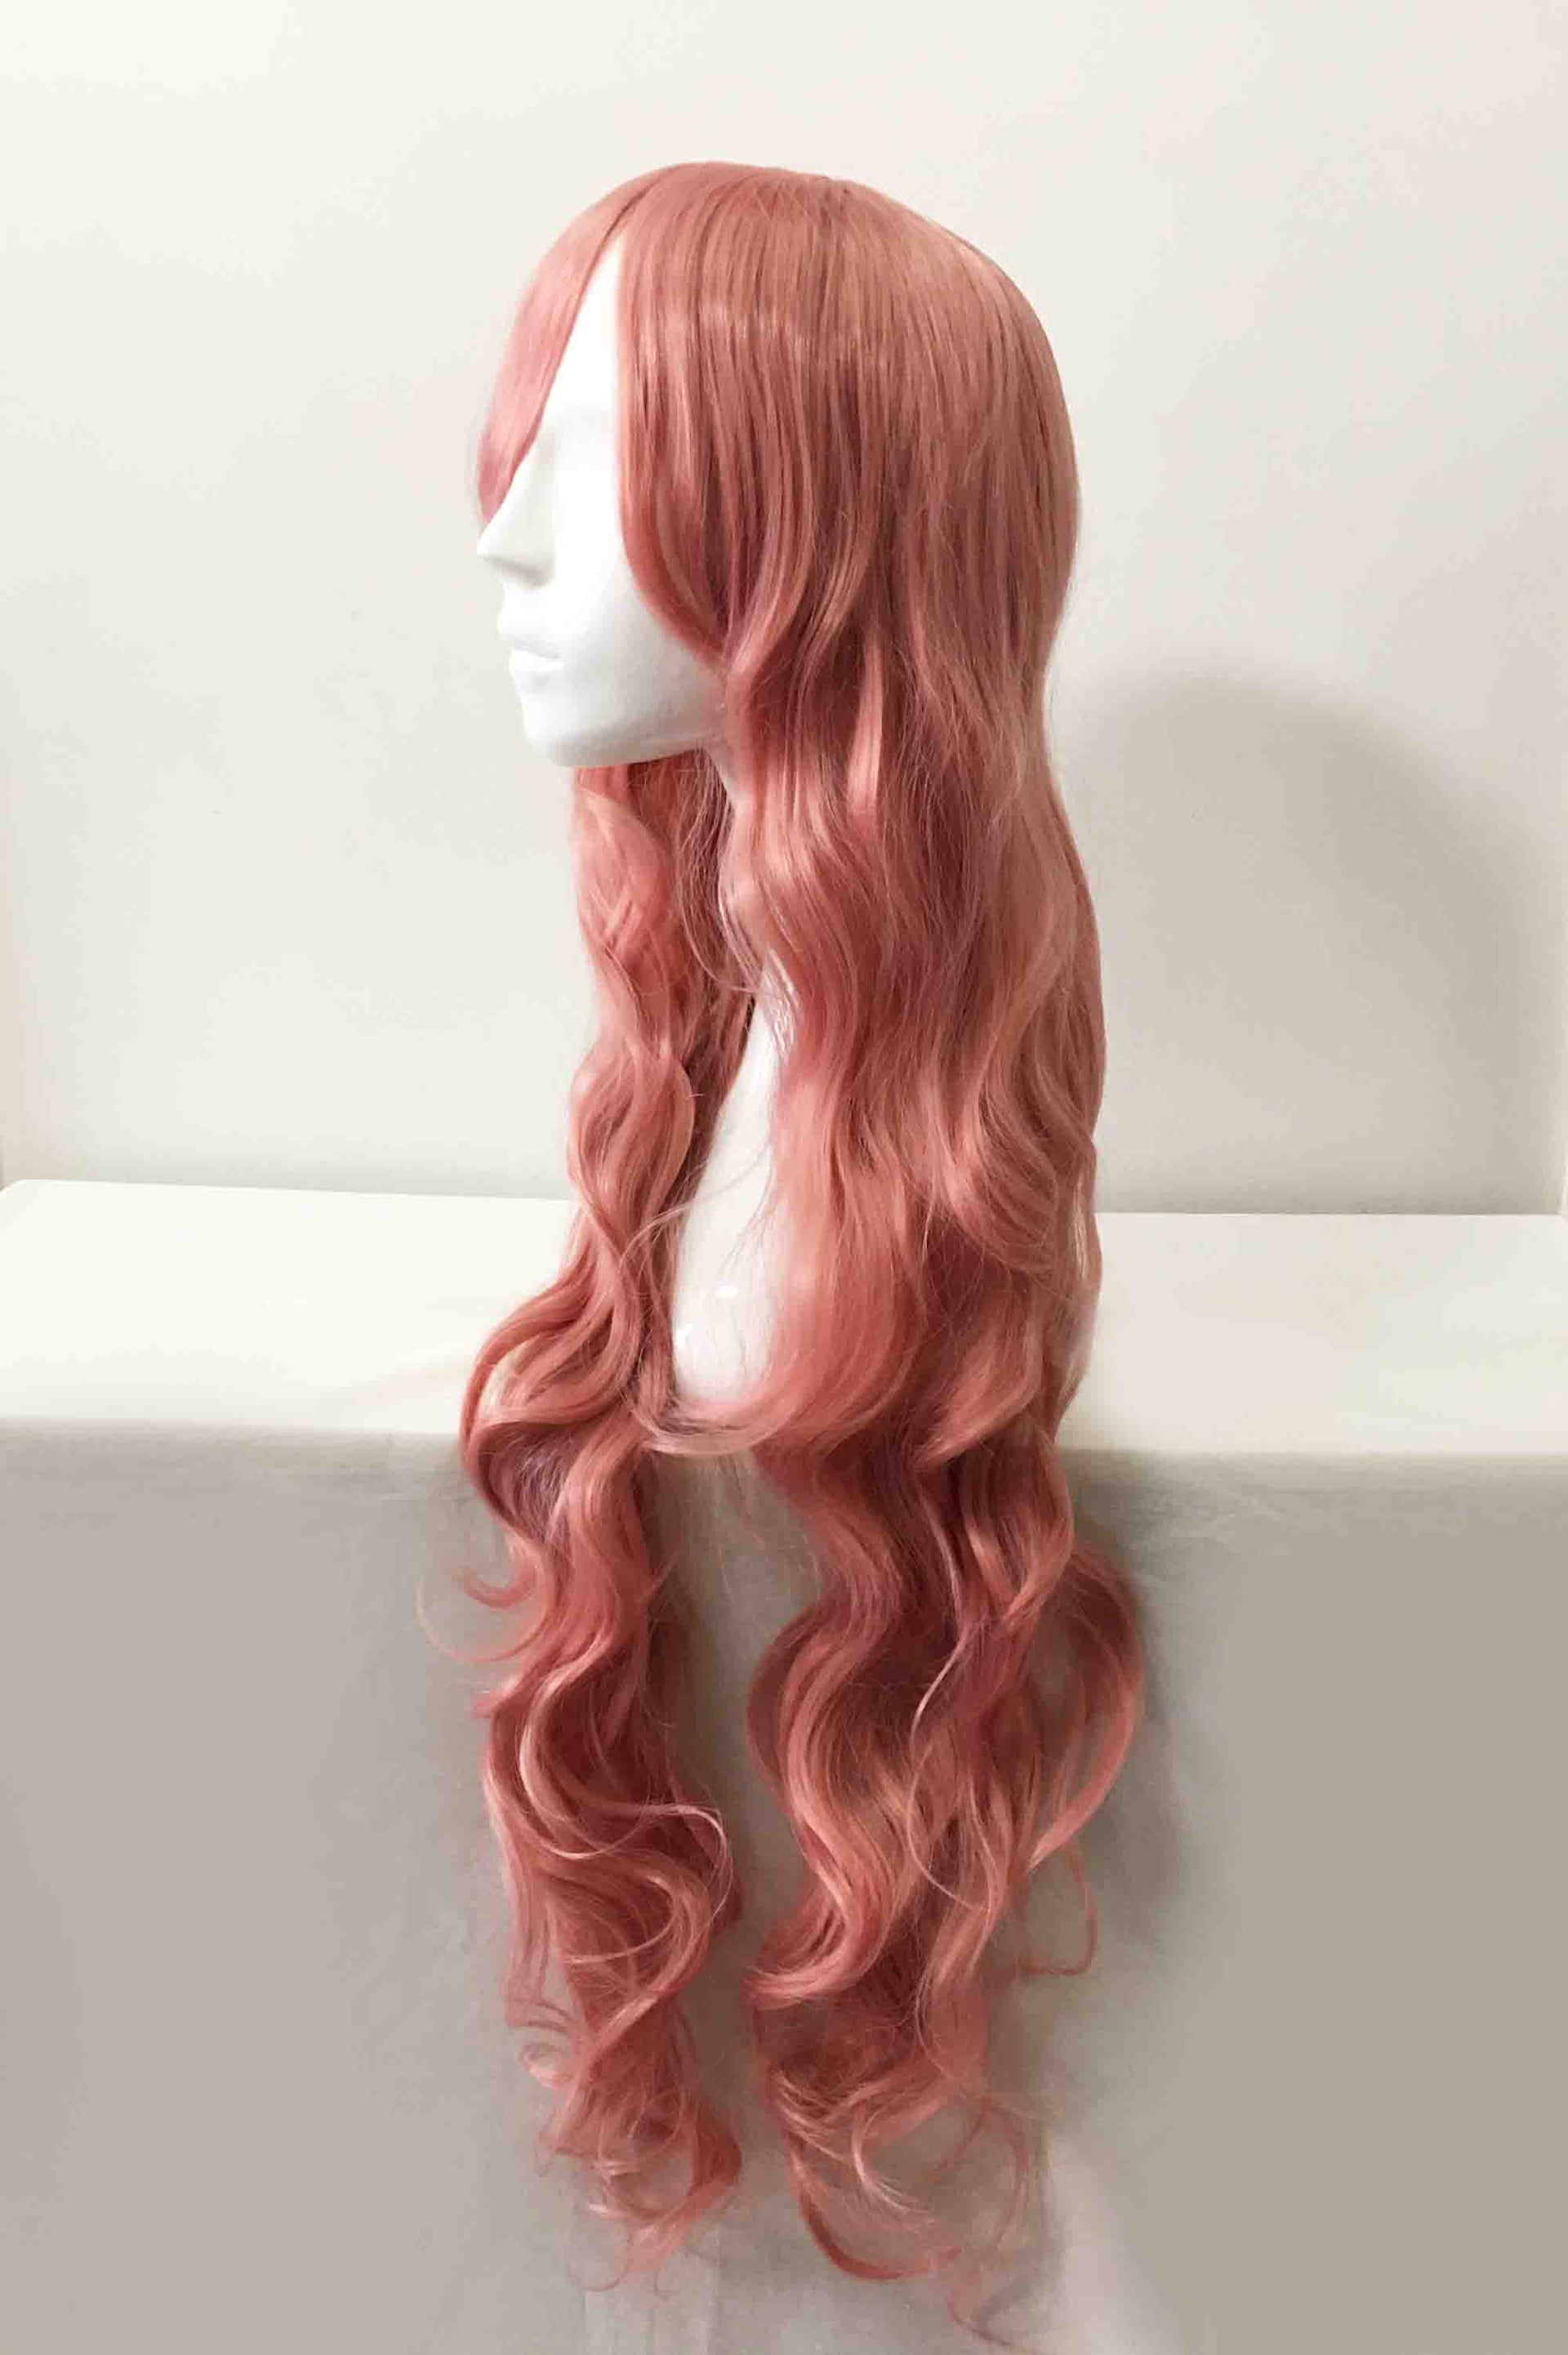 nevermindyrhead Women Dark Pink Long Curly Hair Side Swept Long Bangs Cosplay Anime Wig